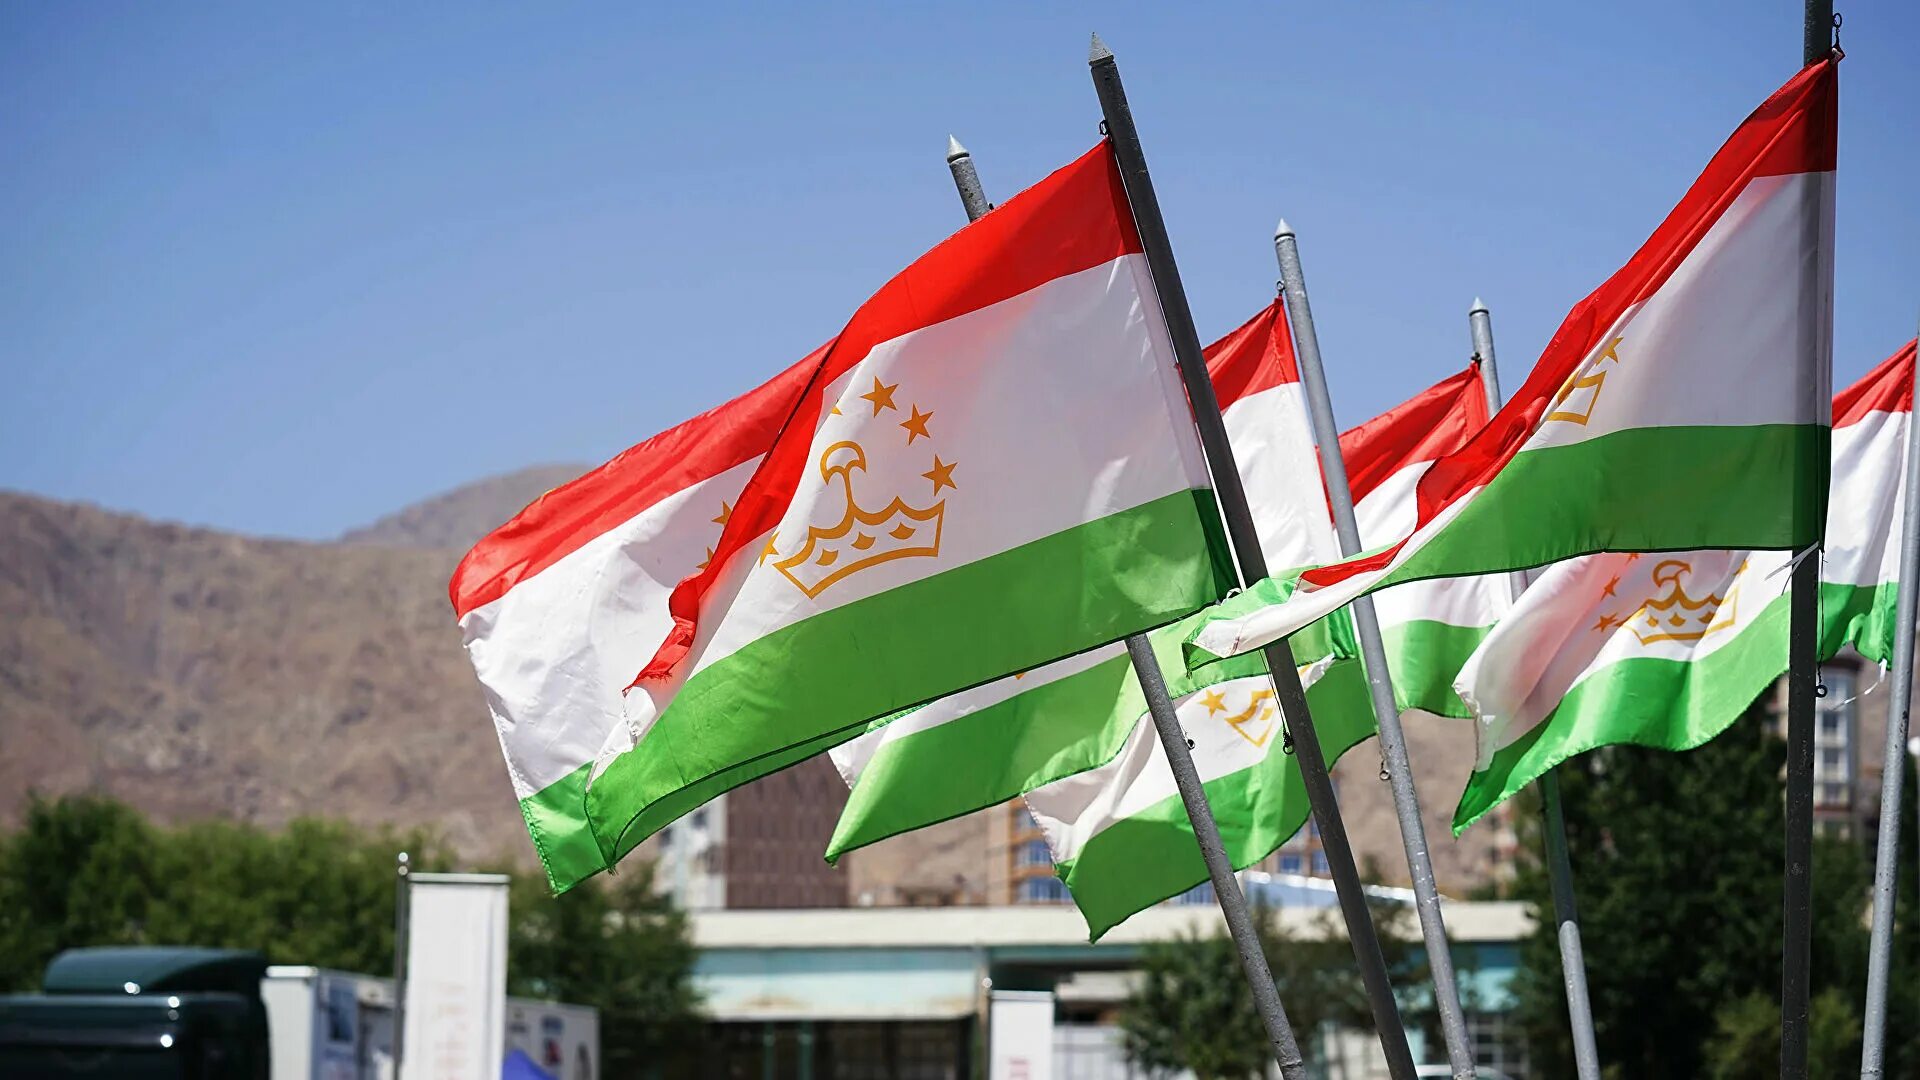 Точикистон язык. Флаг Республики Таджикистан. Флаг Таджикистана 2022. Флаг Таджикистана в Душанбе. Флаг Таджикистана на флагштоке.